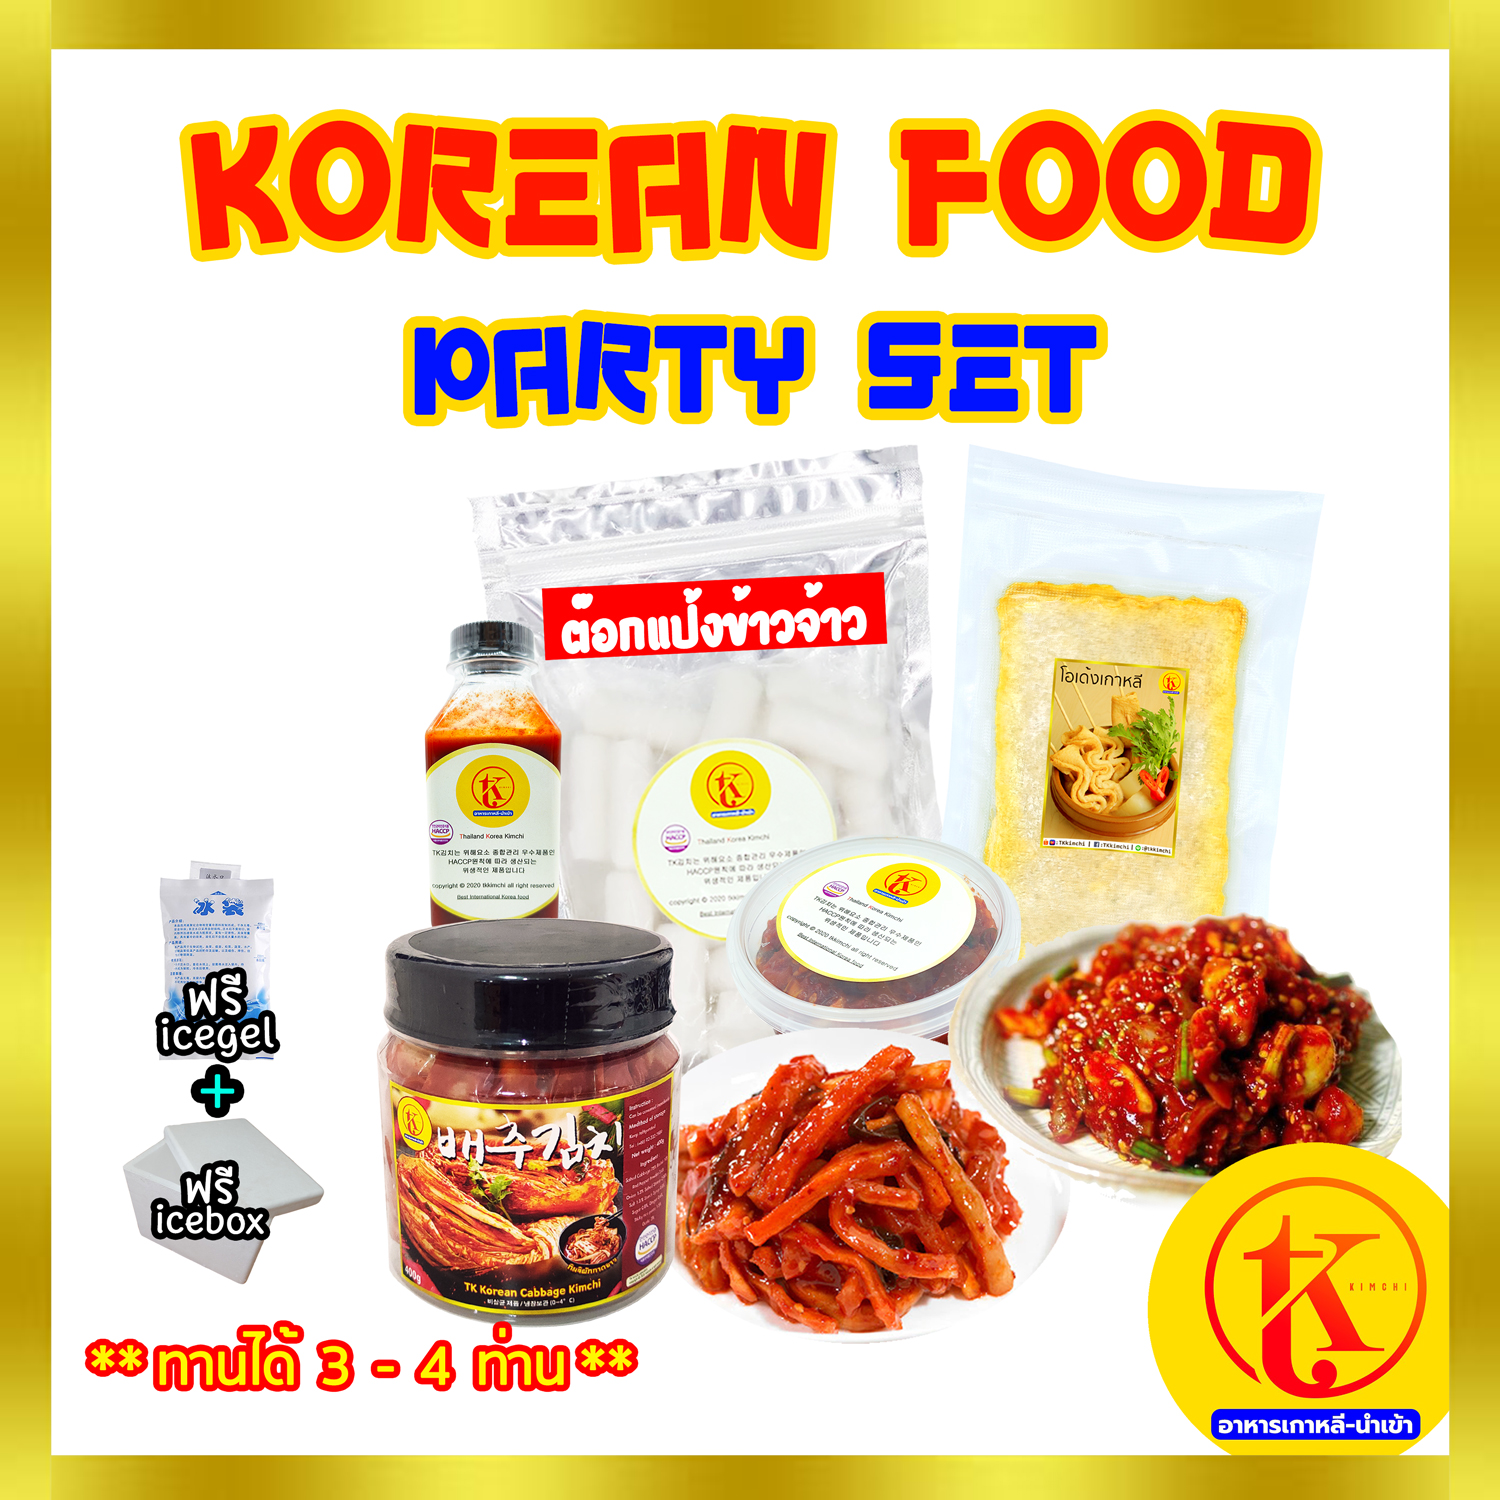 Korean Food Party set ชุดสุดคุ้ม อร่อยยกแงก๊งค์ ? ต๊อกแป้งข้าวจ้าว ? ? ชุดเล็ก สำหรับ 3 - 4 ท่าน ? by TKkimchi